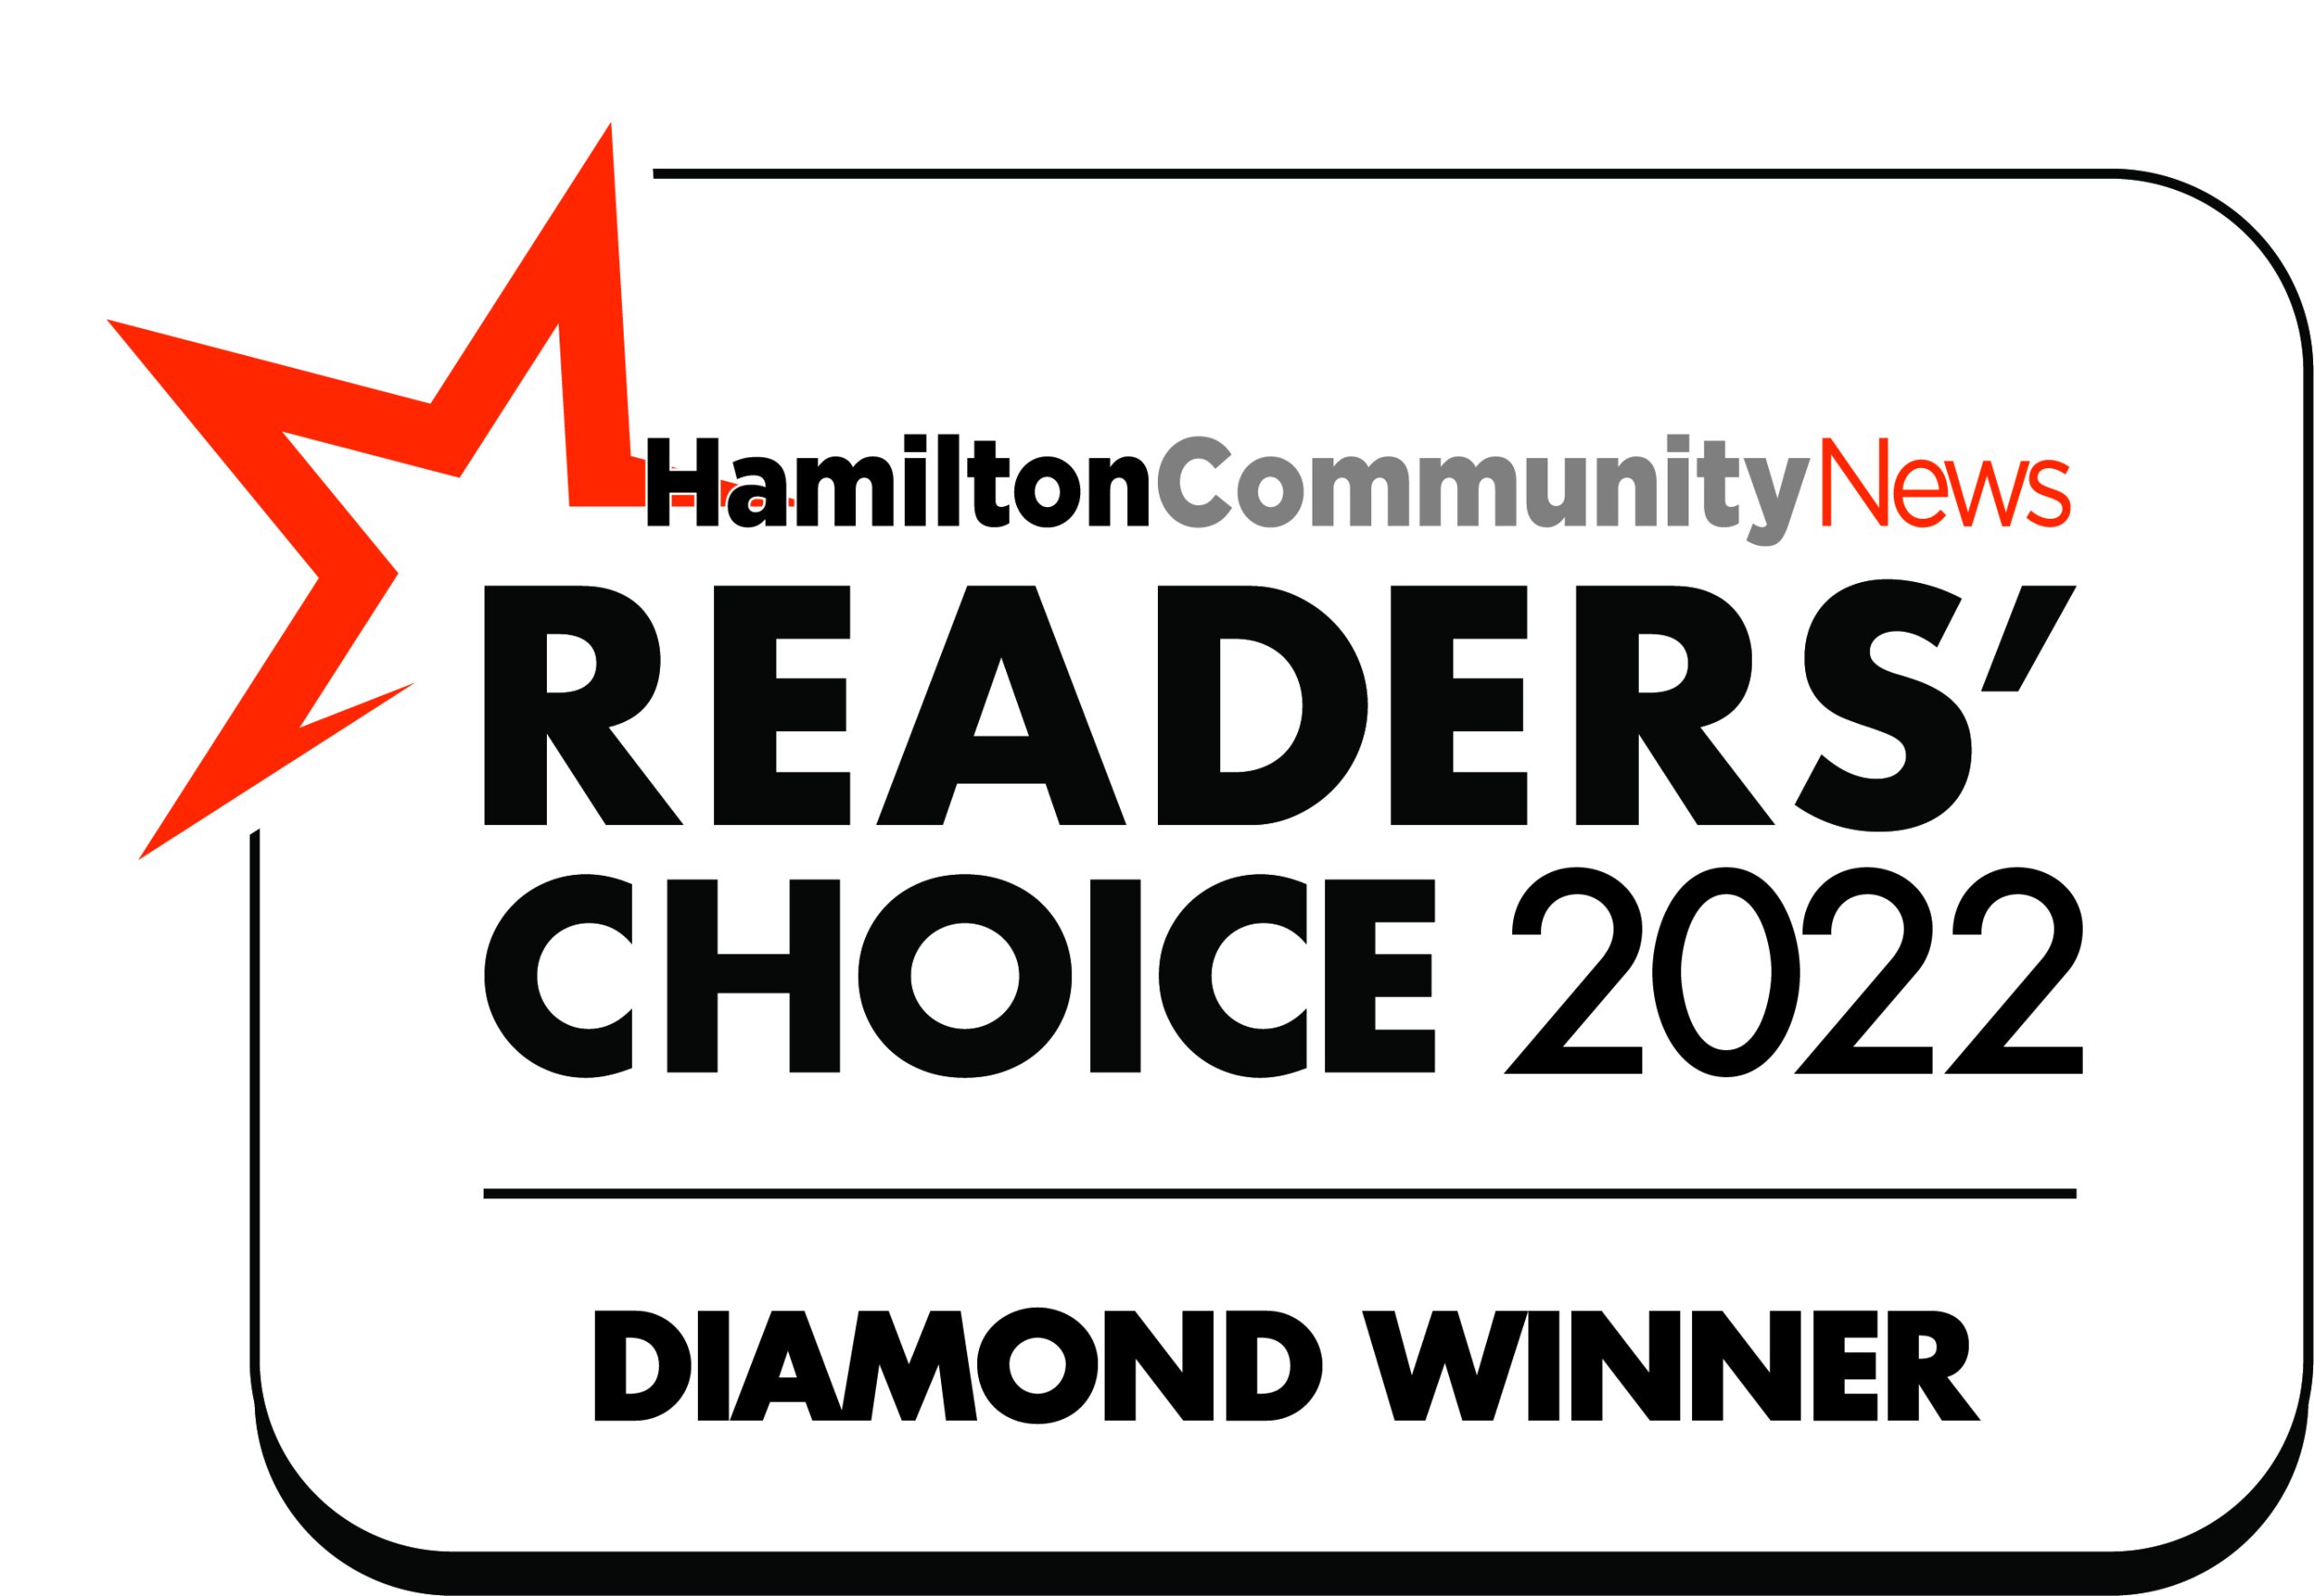 Readers Choice 2022 Diamond Winner Award - Hamilton Community News